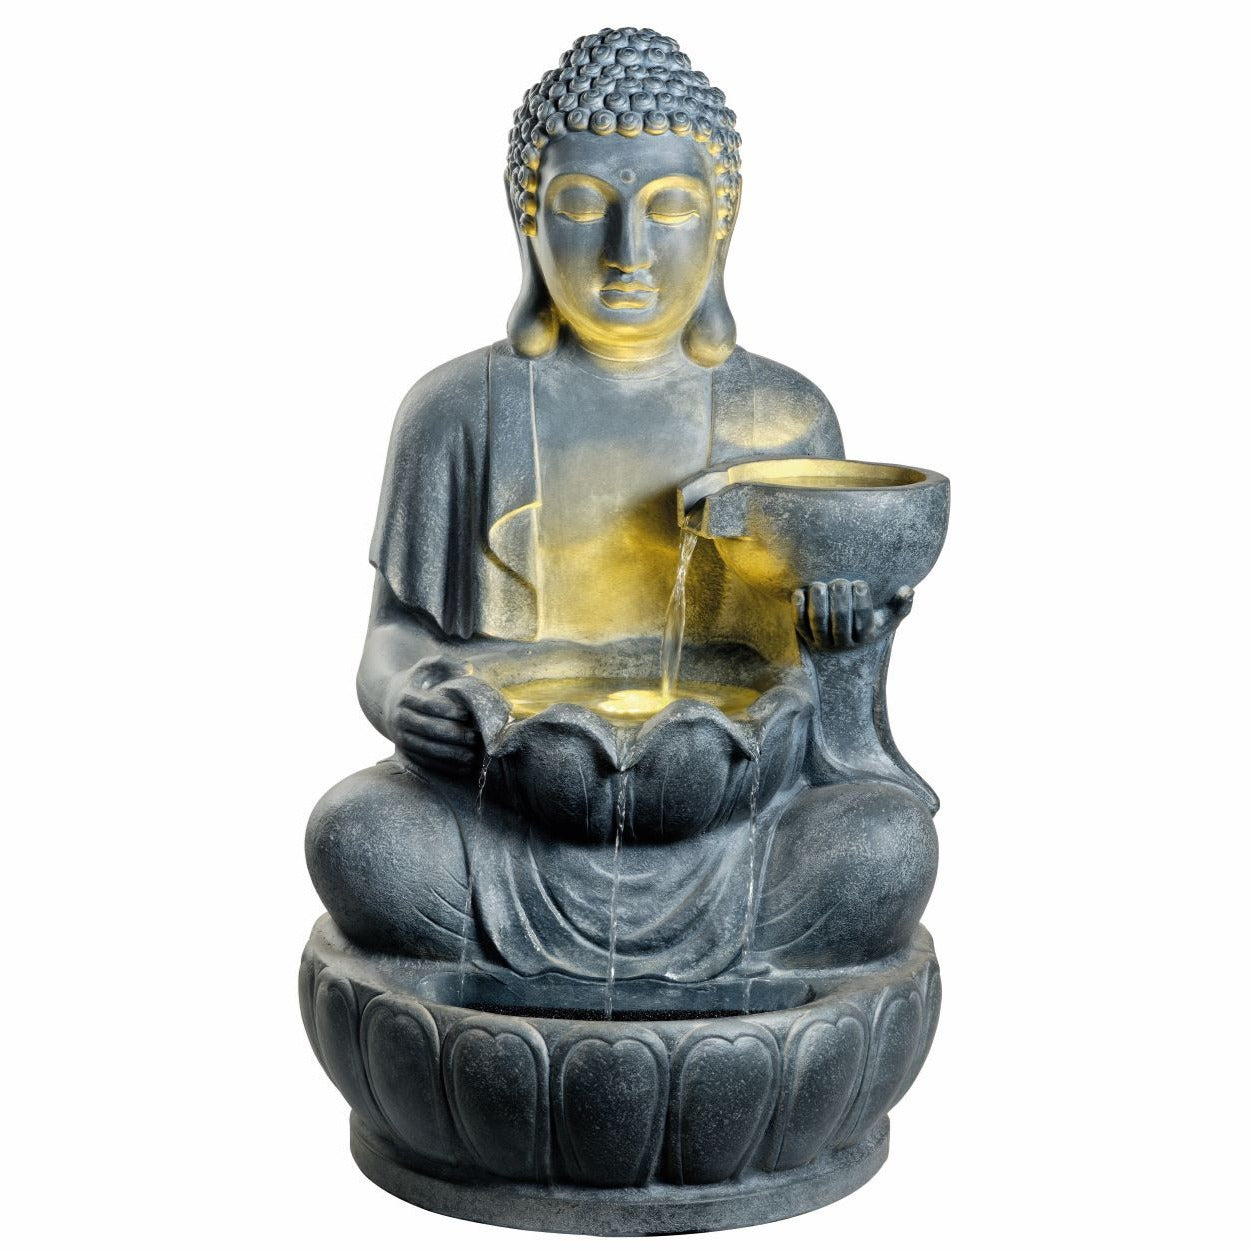 Sitting Buddha Water Feature - No Plumbing